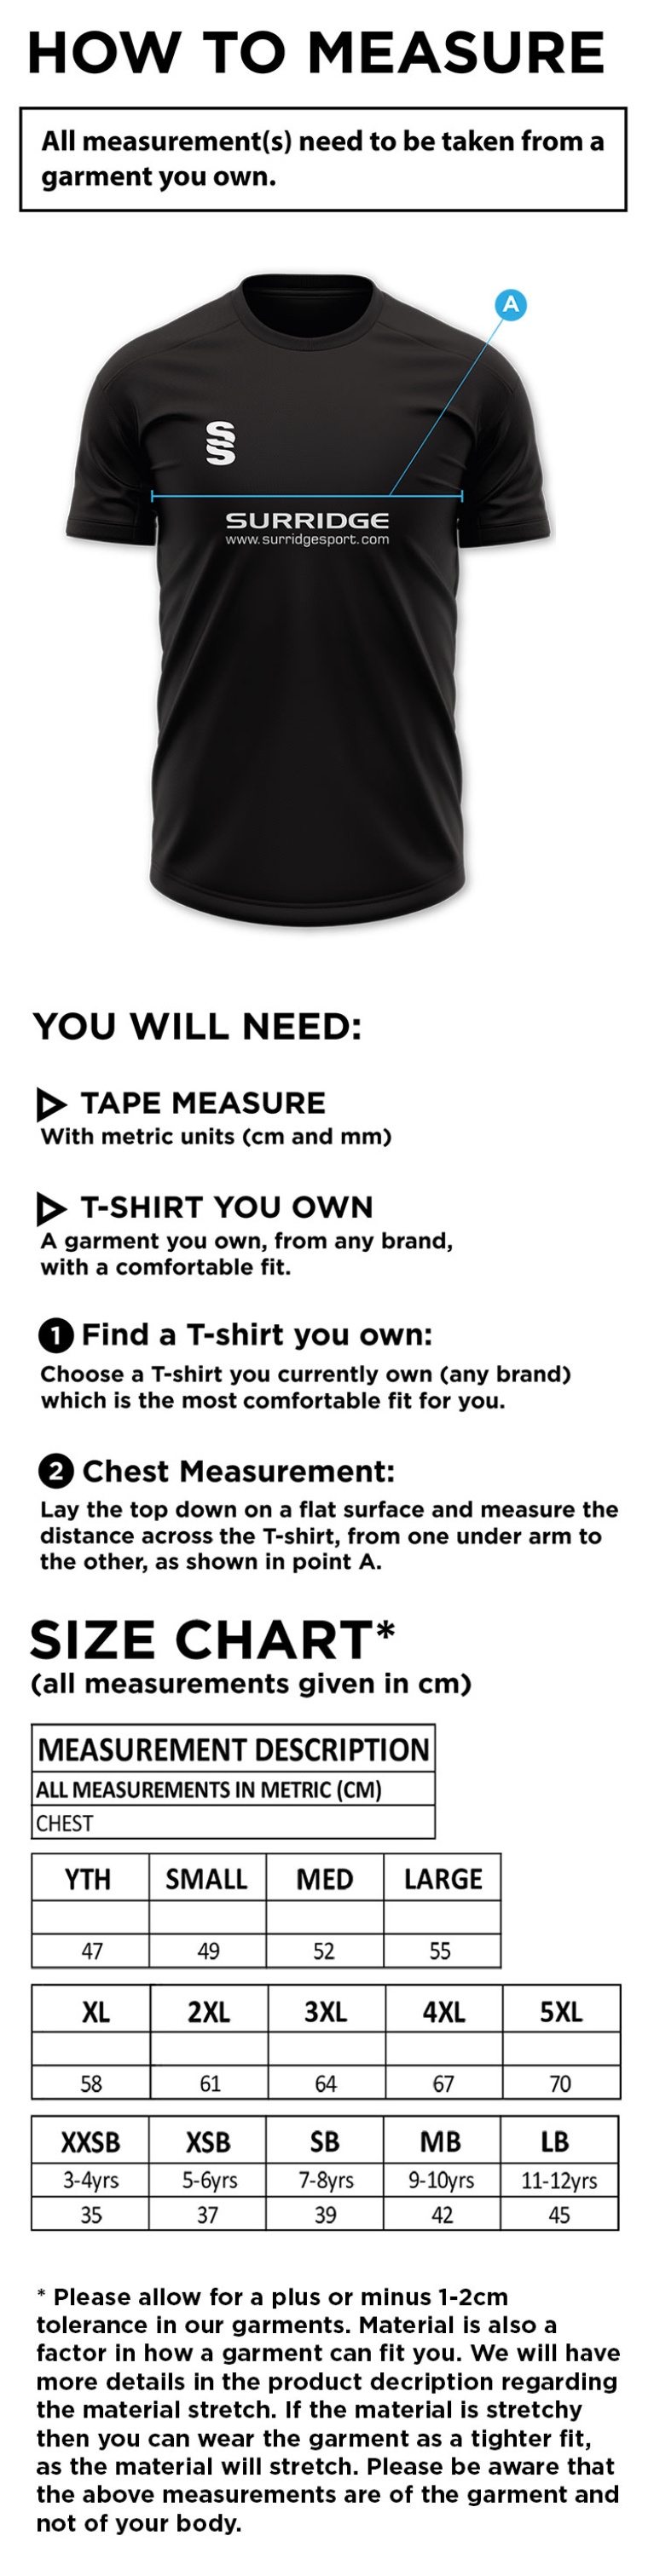 Women's Dual Gym T-shirt : Black Melange - Size Guide